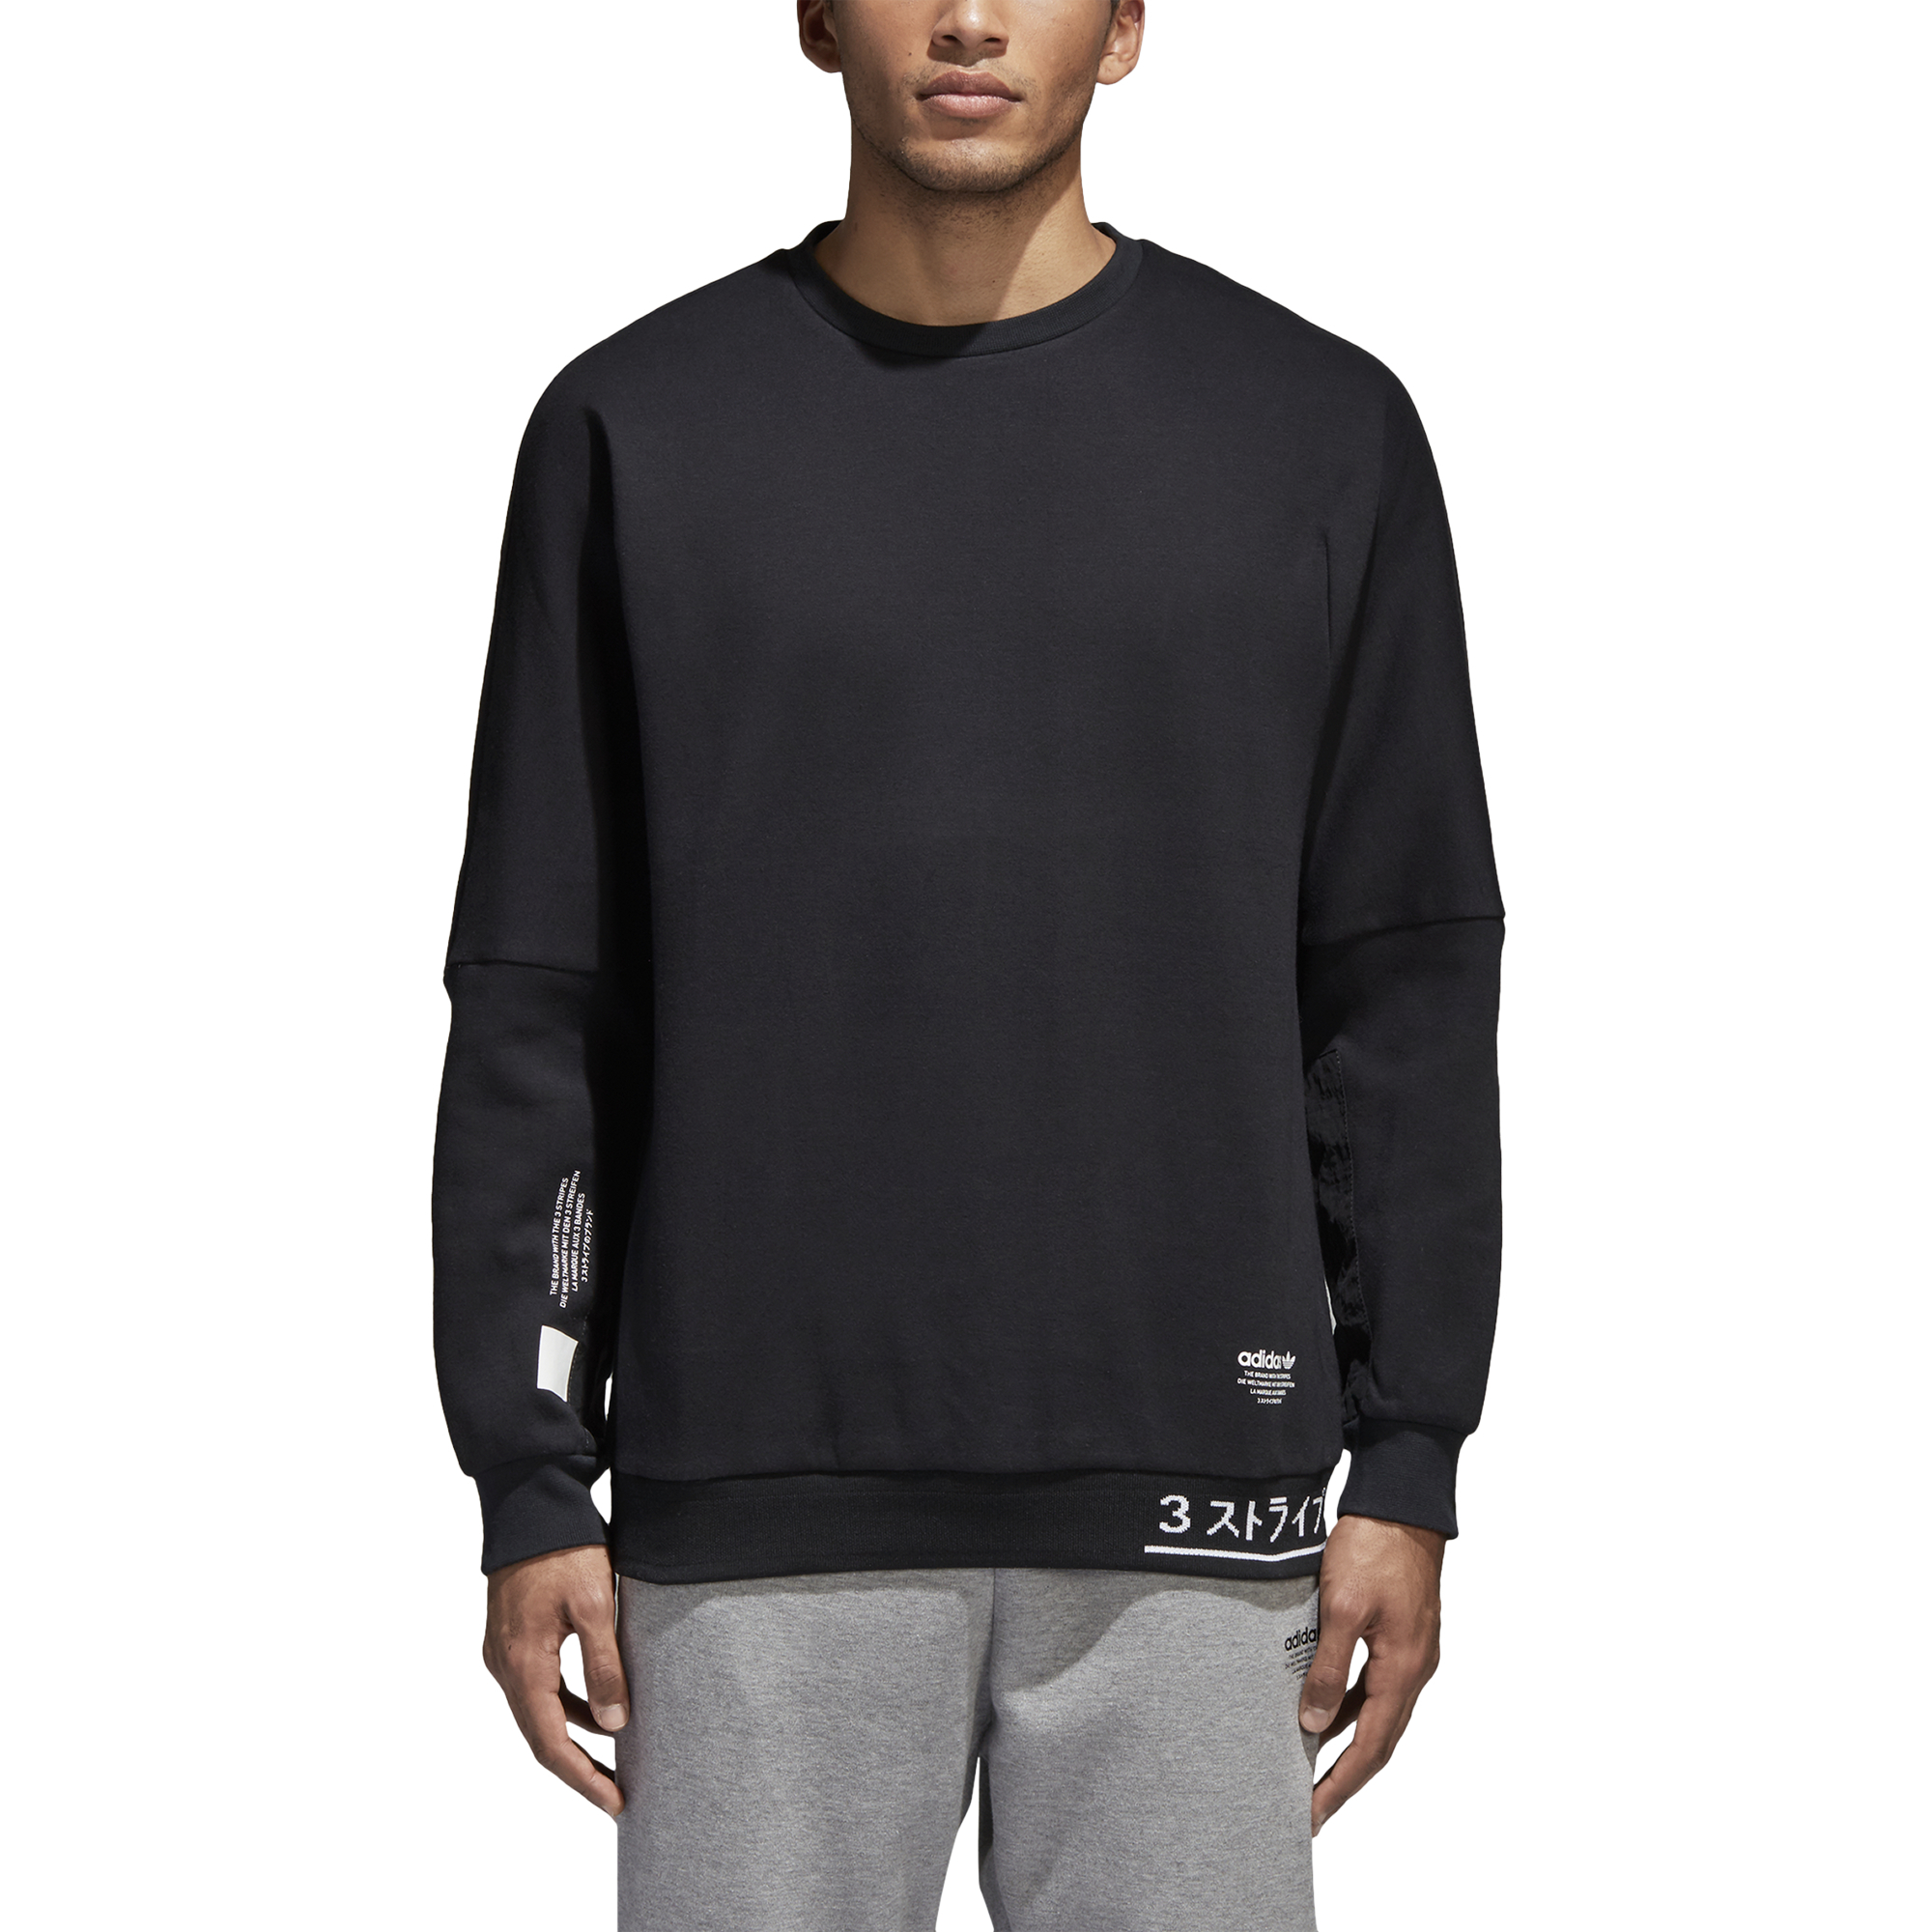 Adidas NMD Crew Sweatshirt Black 